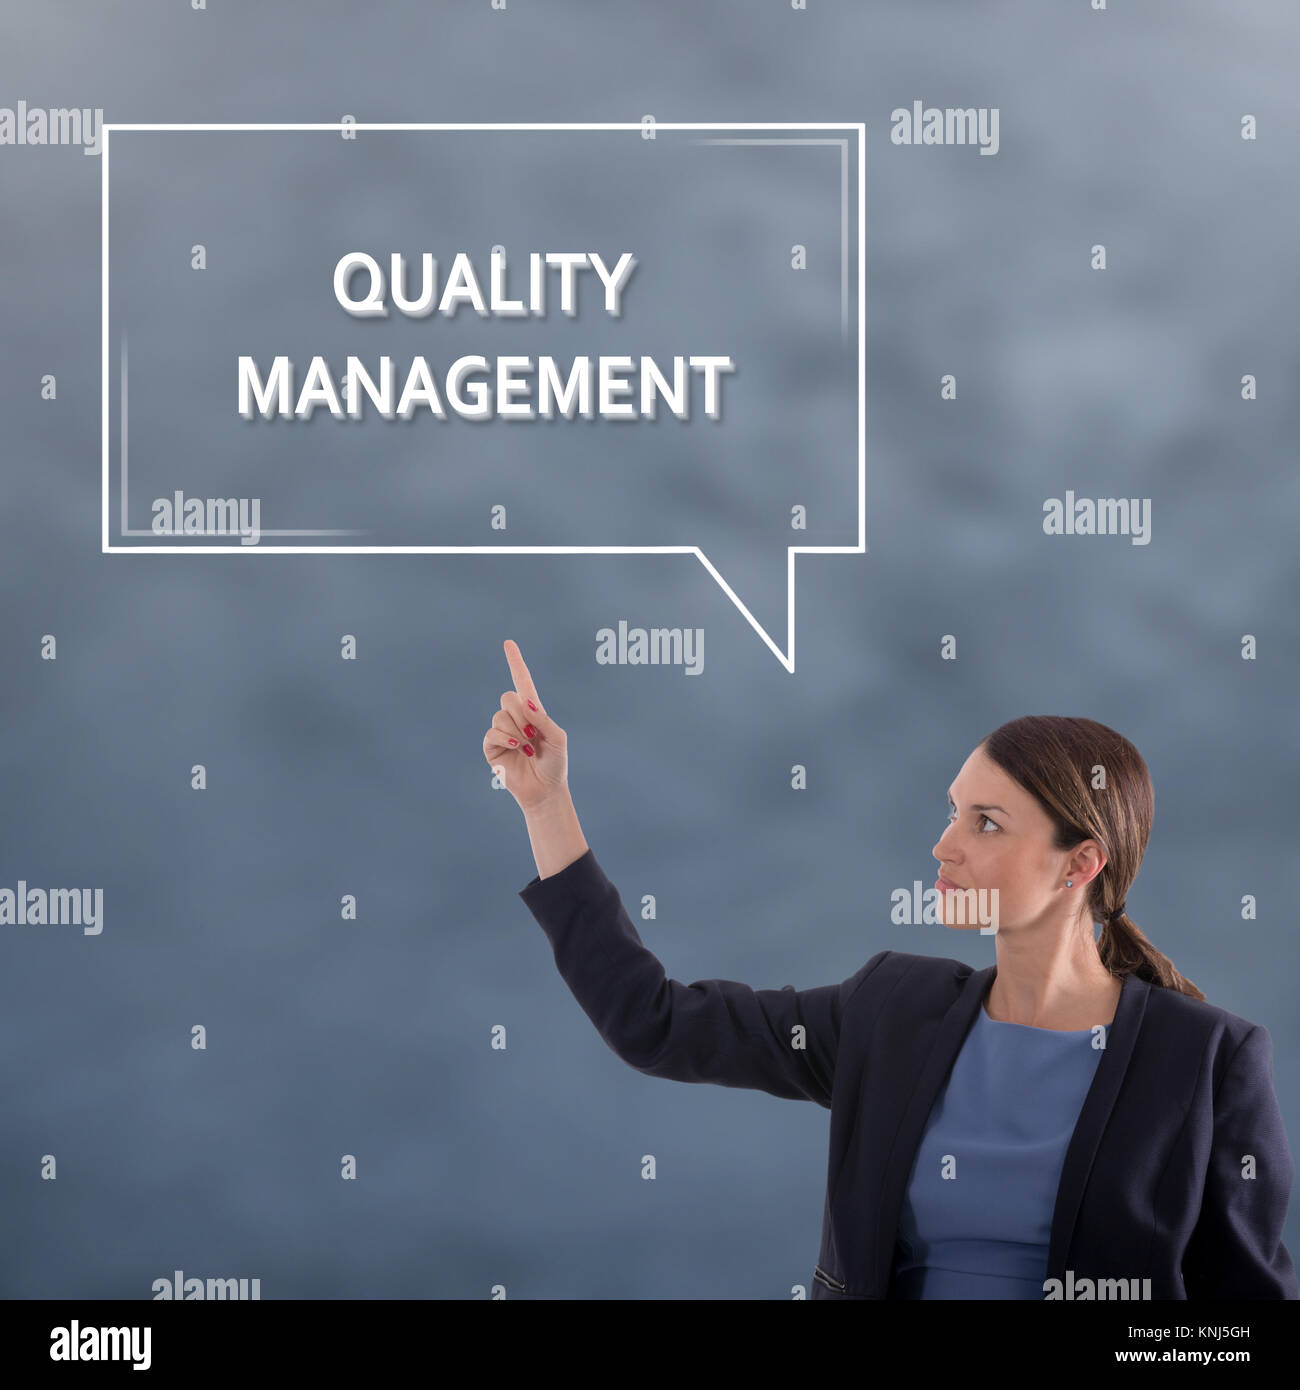 QUALITY MANAGEMENT Business Concept. Business Woman Graphic Concept Stock Photo